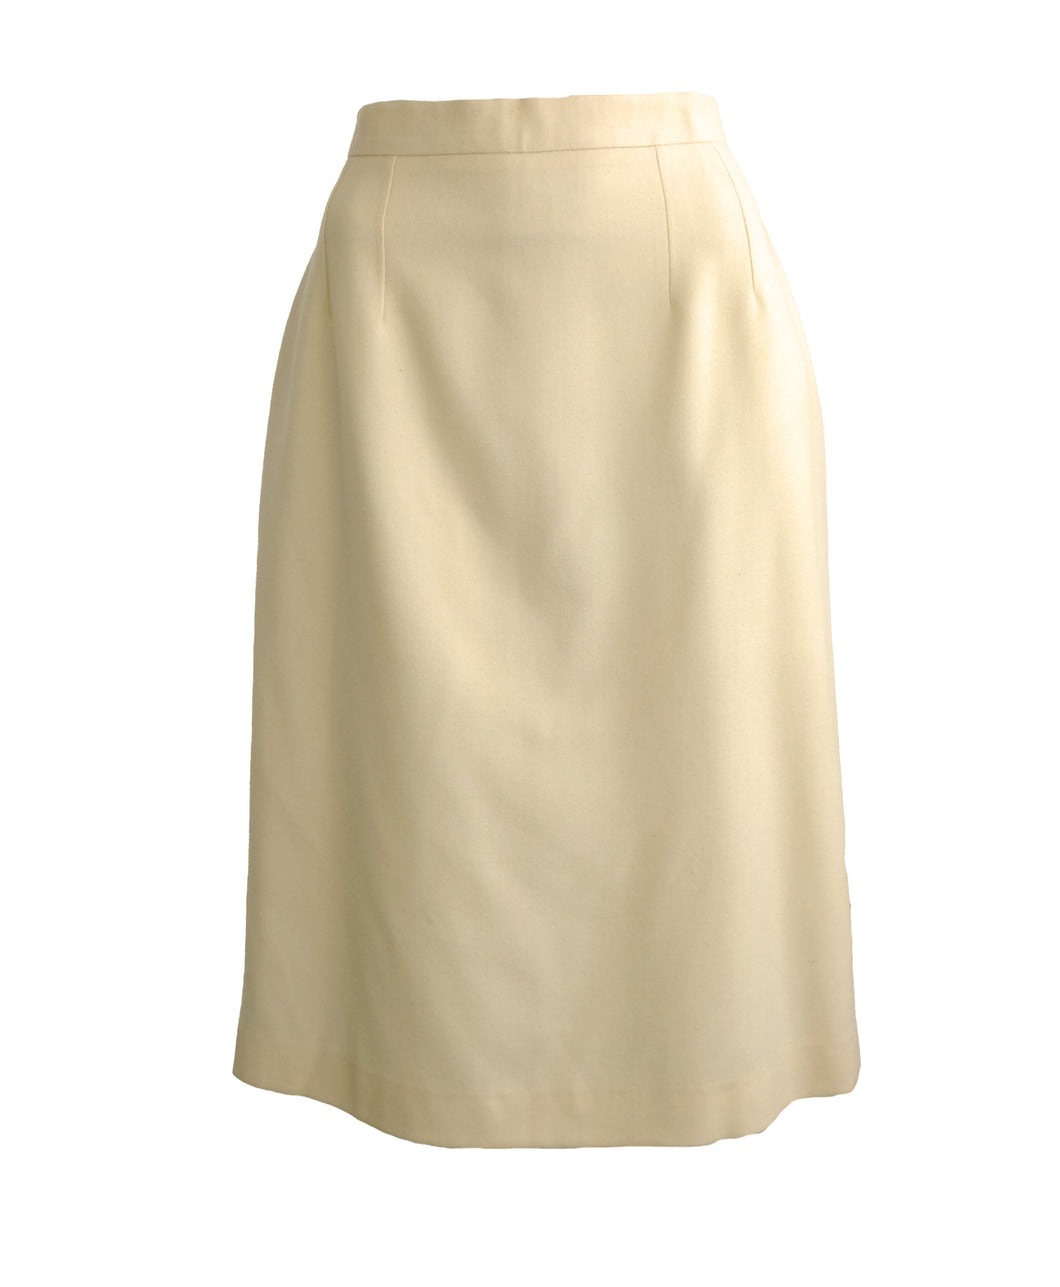 Lanvin 1980s Vintage Midi Skirt in Cream Wool, UK12-14